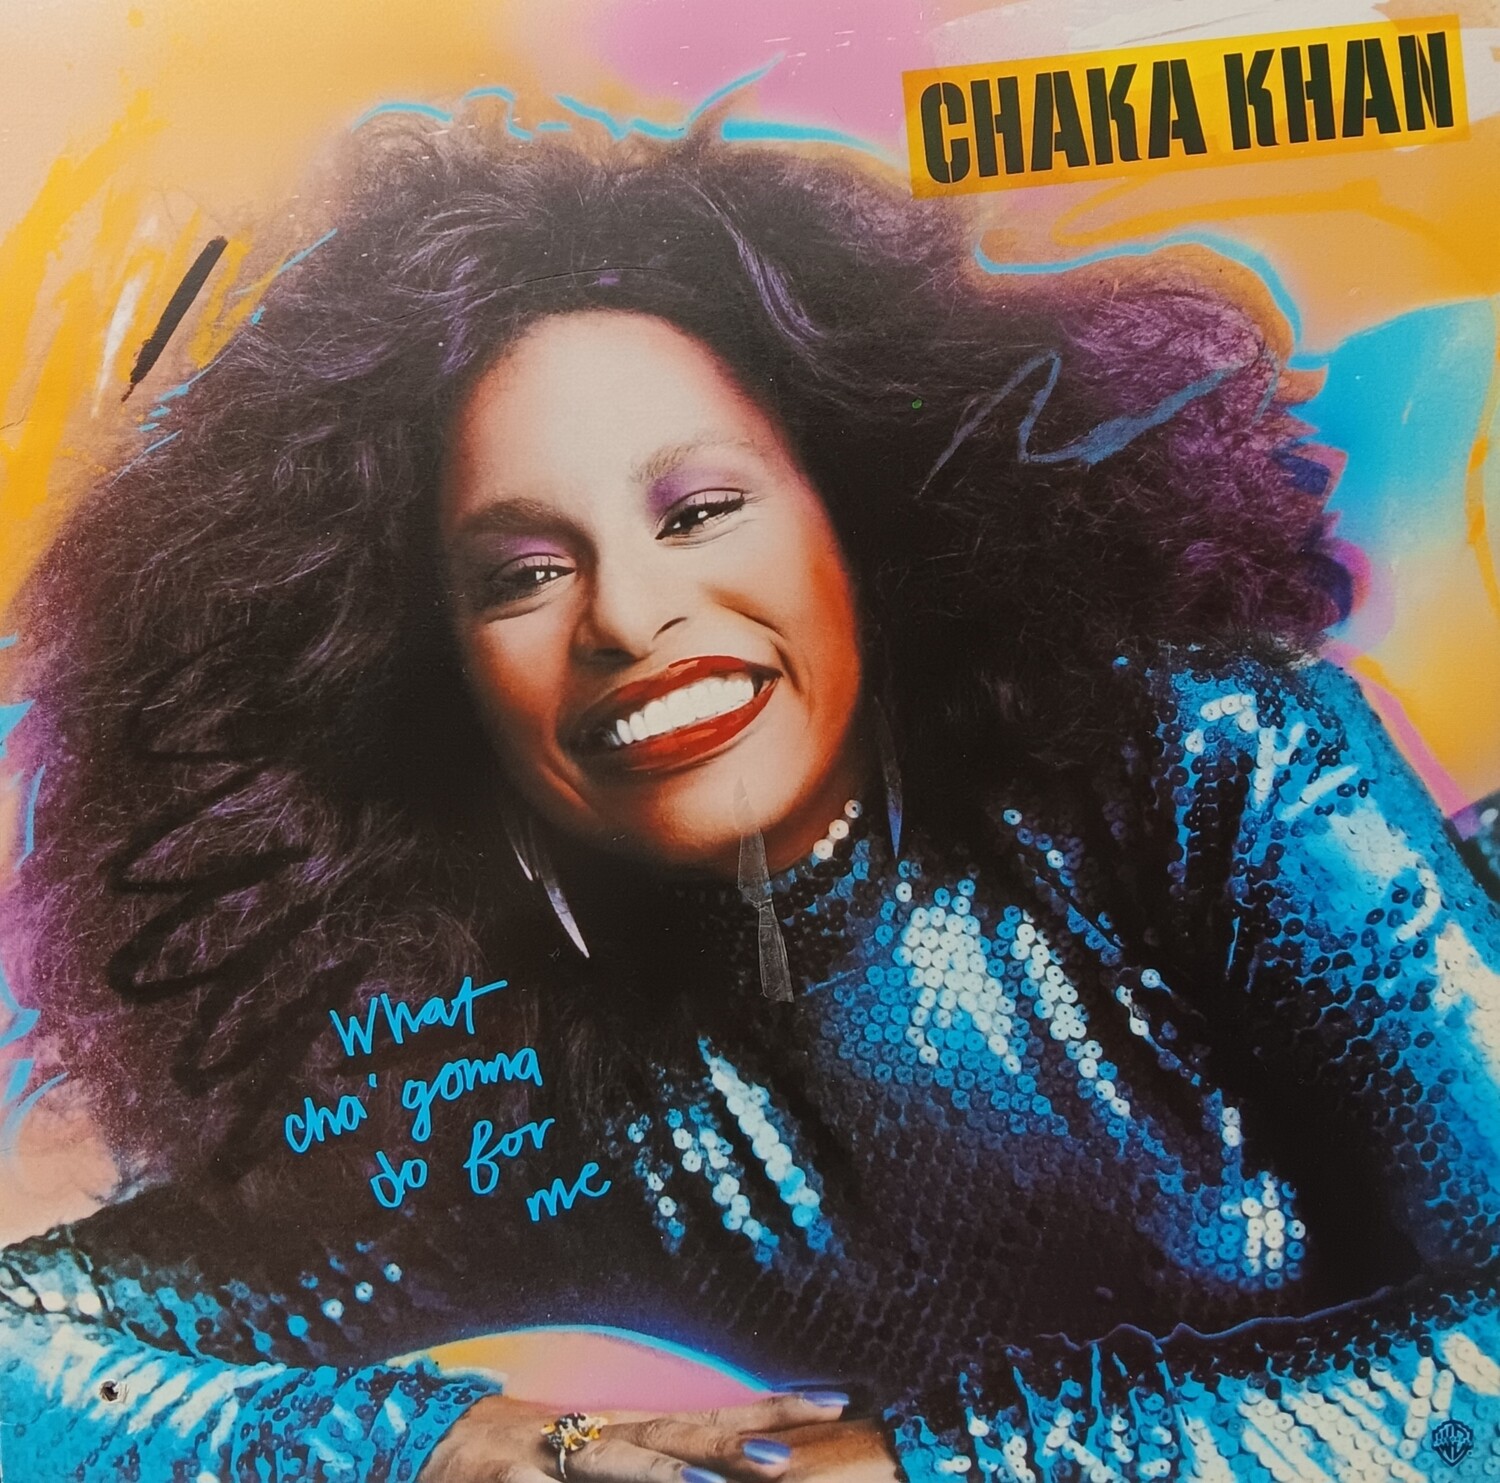 CHAKA KHAN - What cha gonna do for me